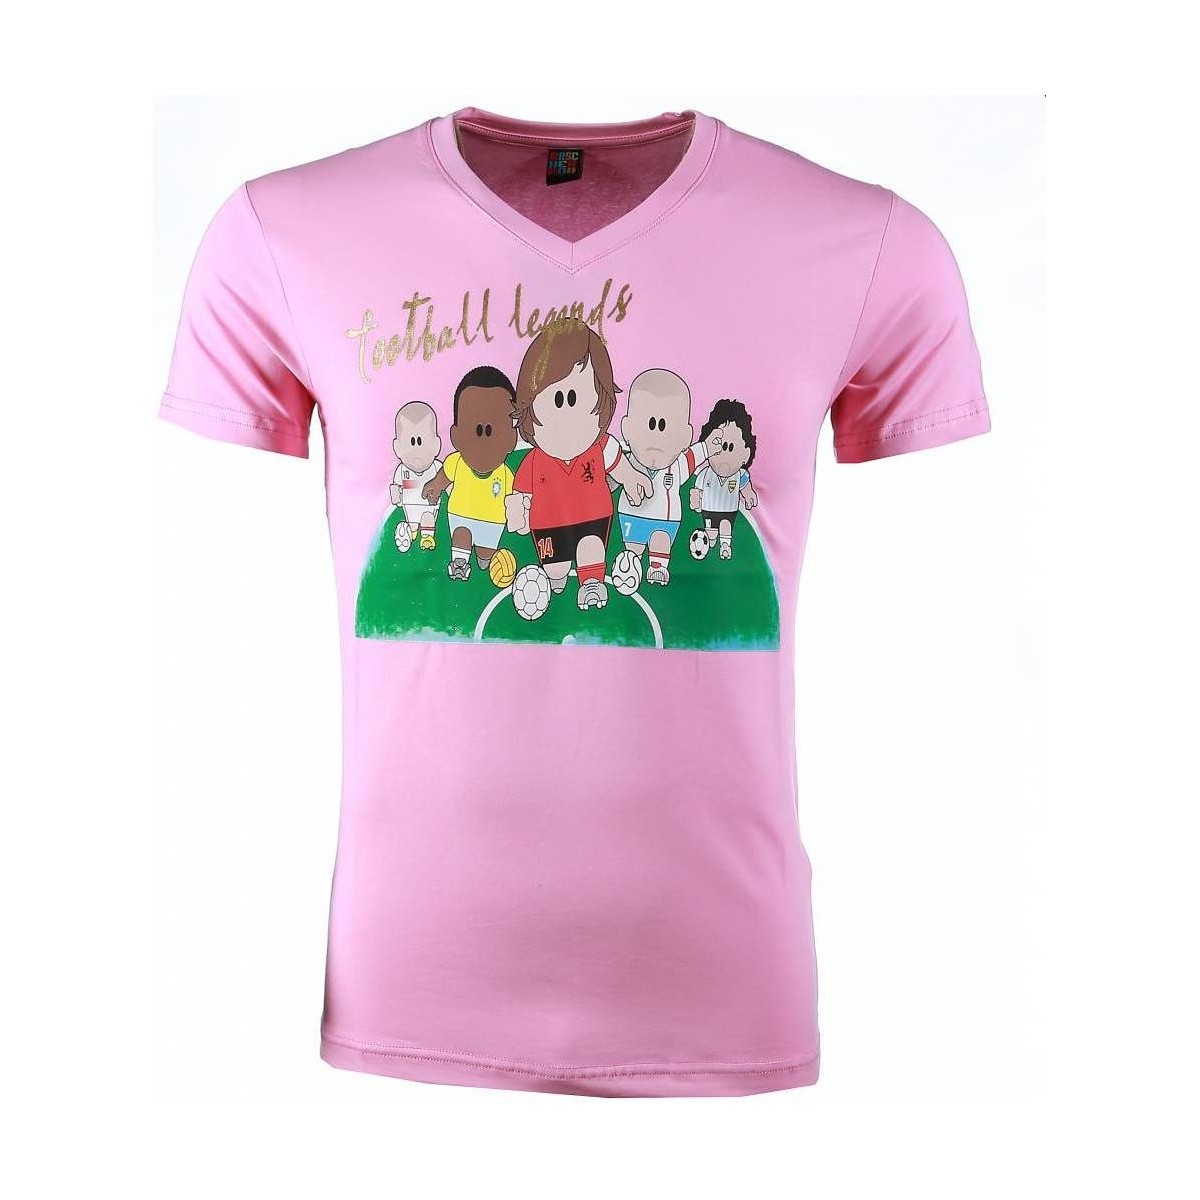 Kleidung Herren T-Shirts Local Fanatic Football Legends Print Rosa